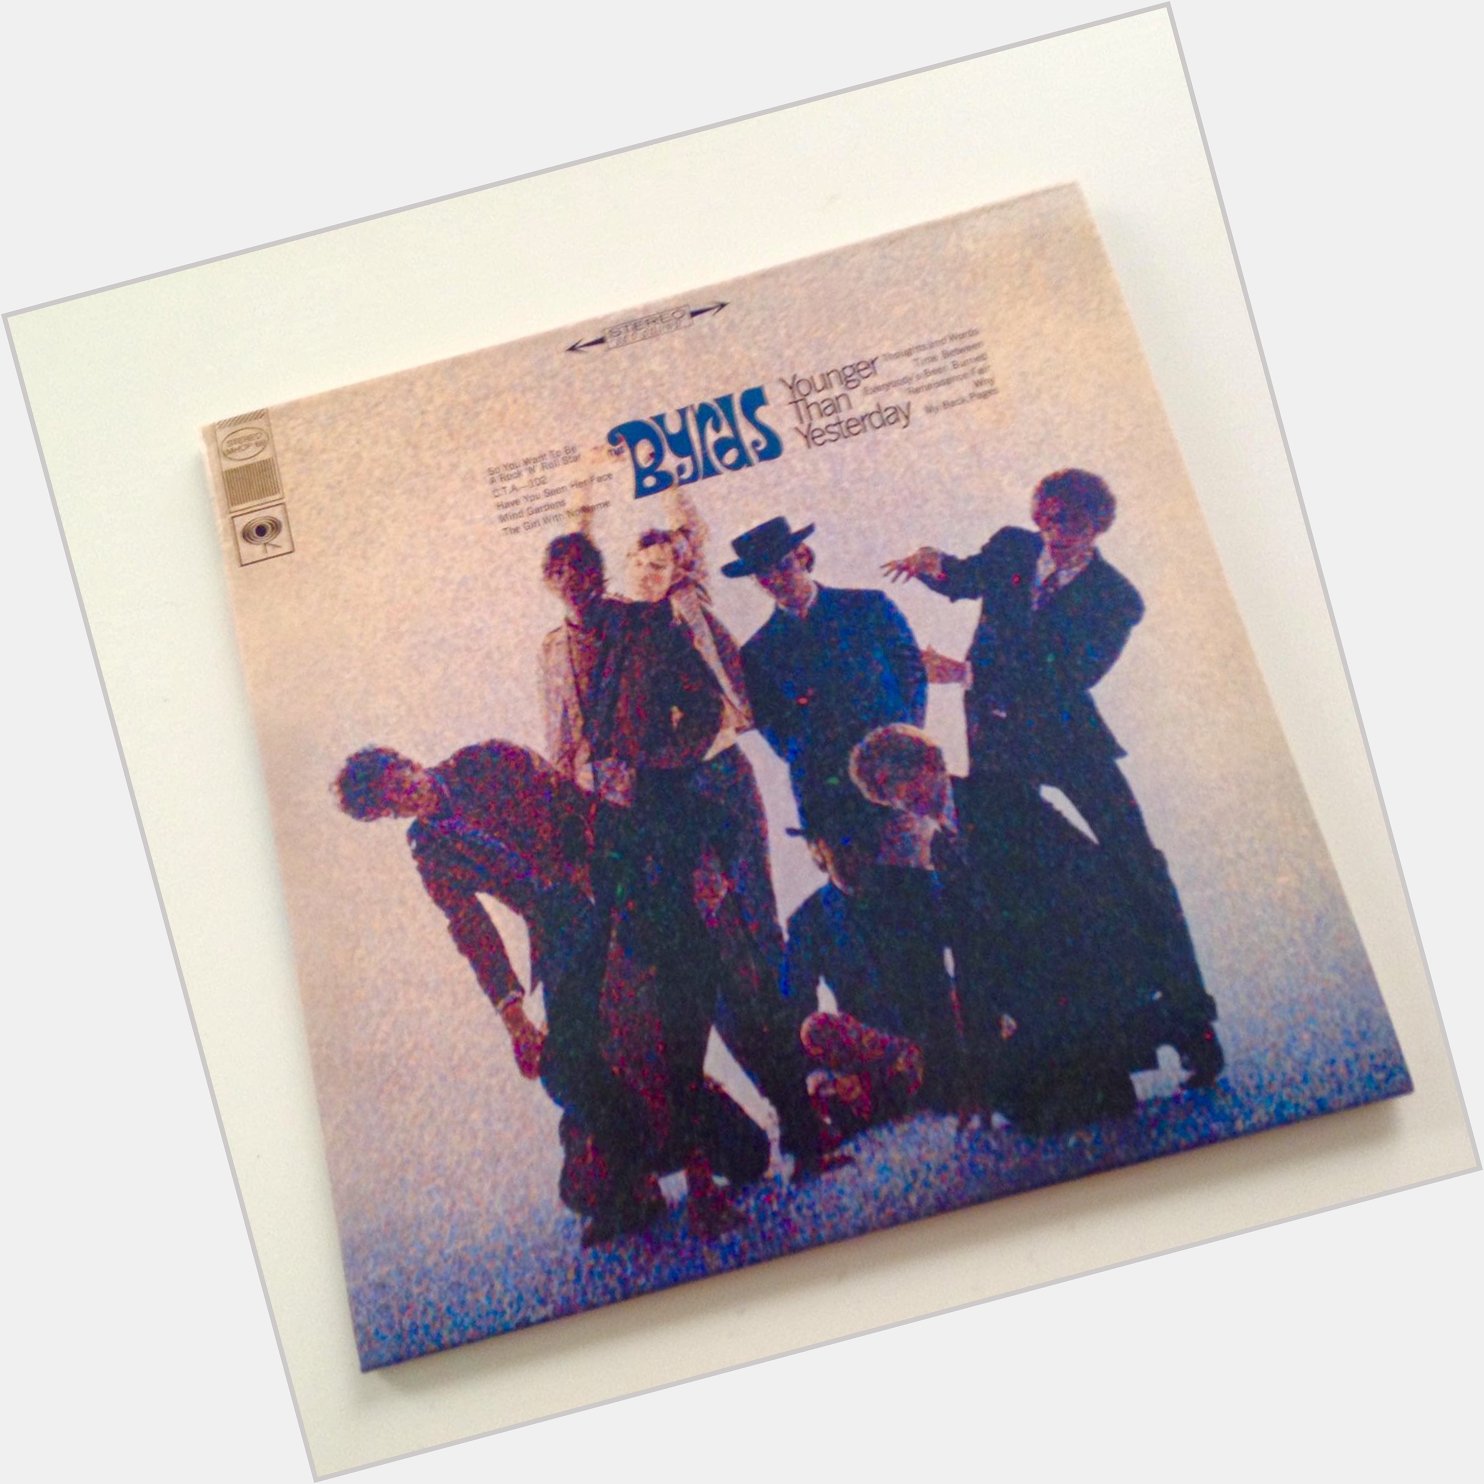 Spinning my favorite album by The Byrds on Roger McGuinn\s birthday.

Happy Birthday  